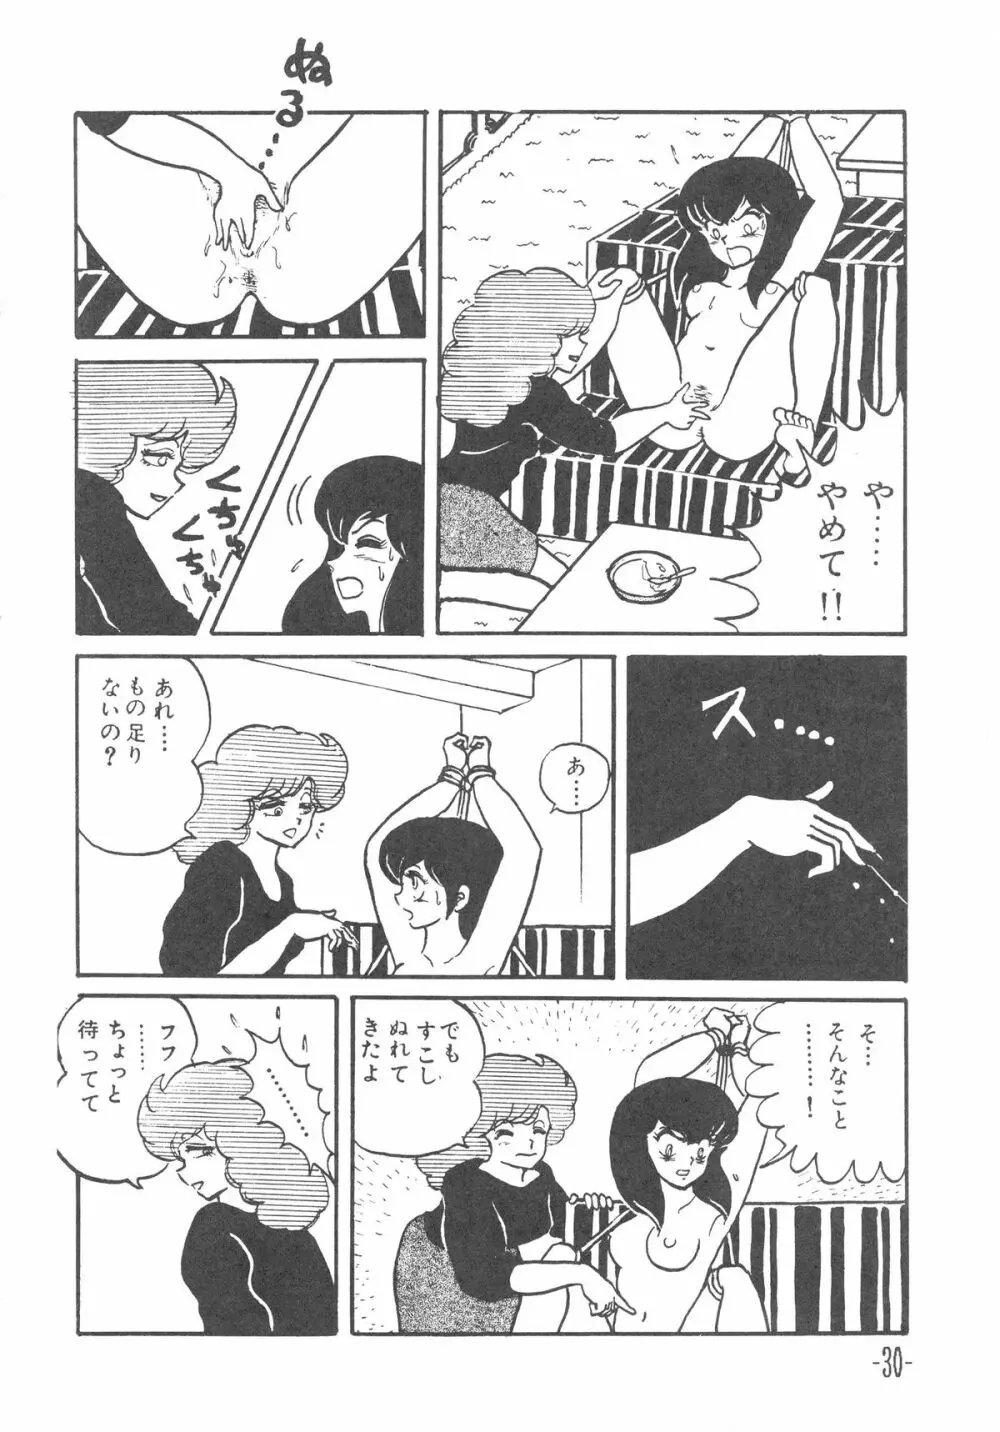 MIBOJIN GESHUKU 1 & 2 30ページ